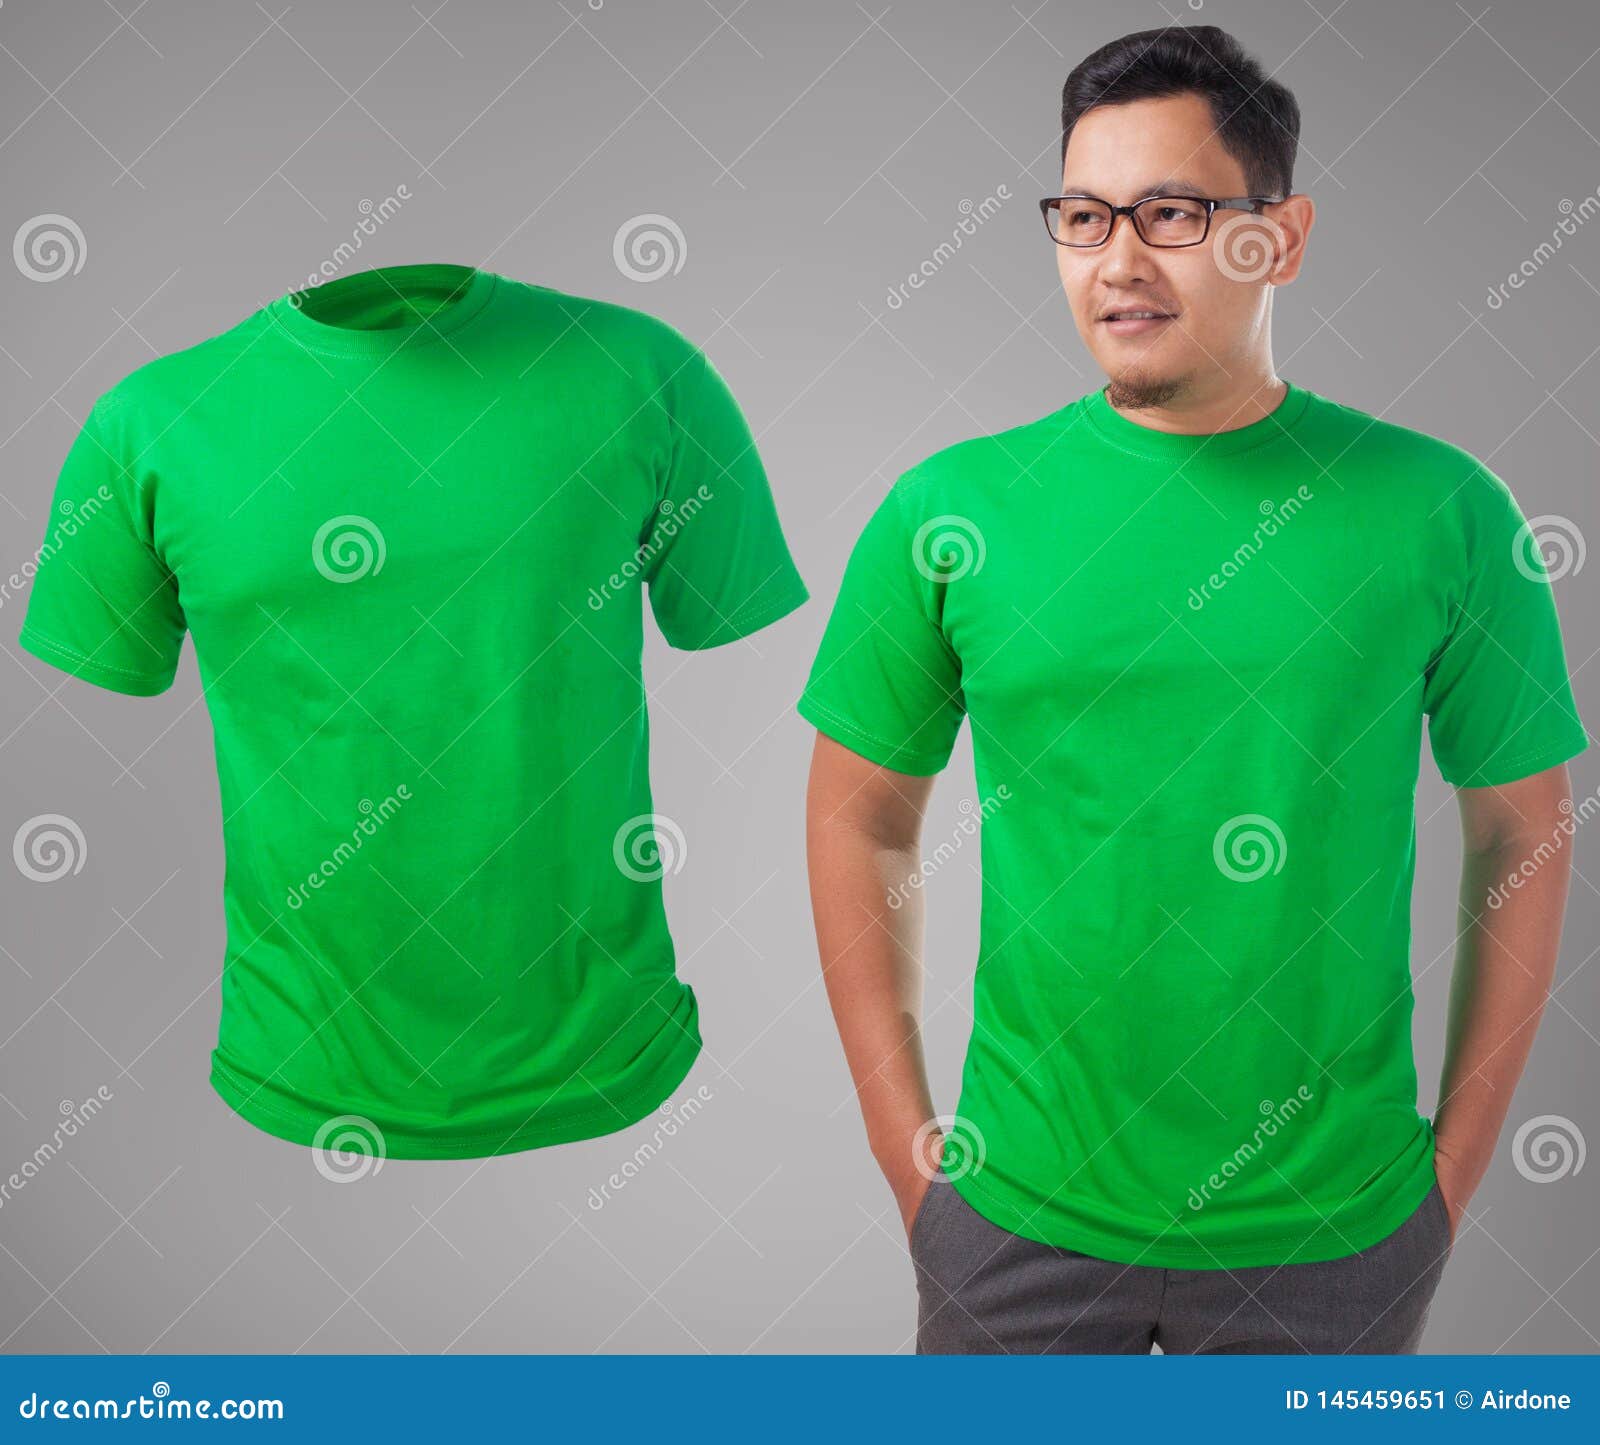 Green Shirt Design Template Stock Image - Image of blank, shirt: 145459651